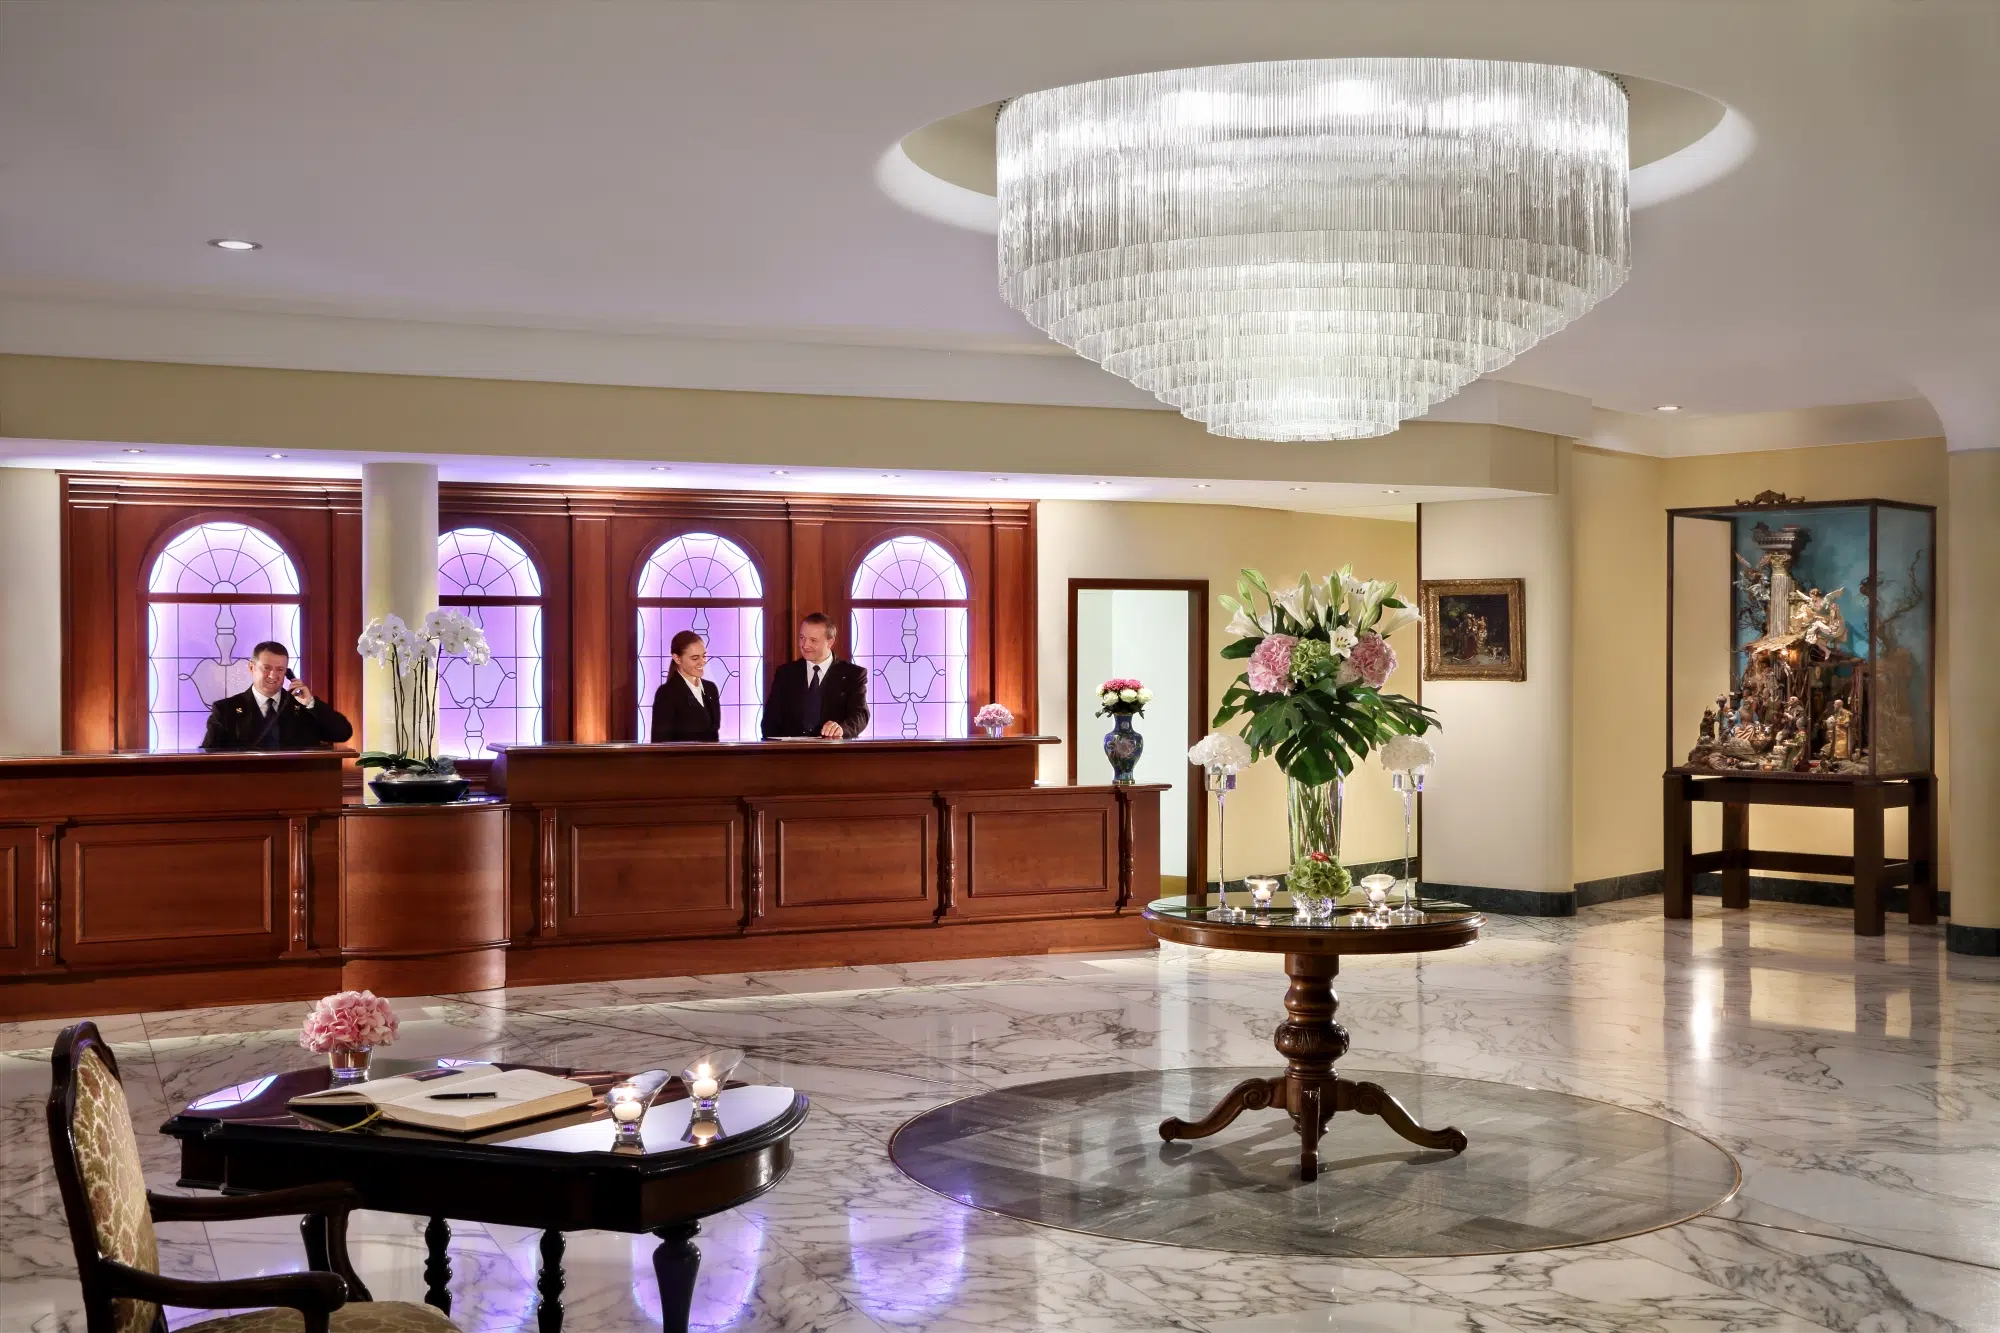 Splendide Hotel in Lugano Switzerland Lobby Area